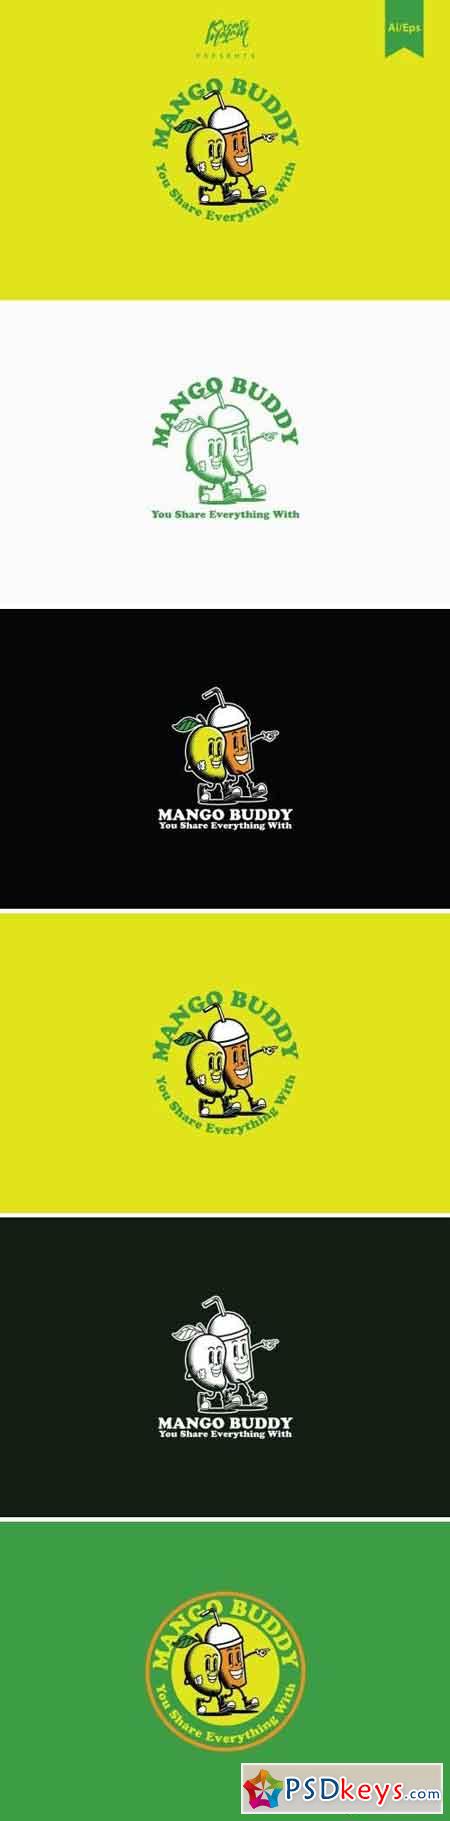 Mango Buddy Logo Template